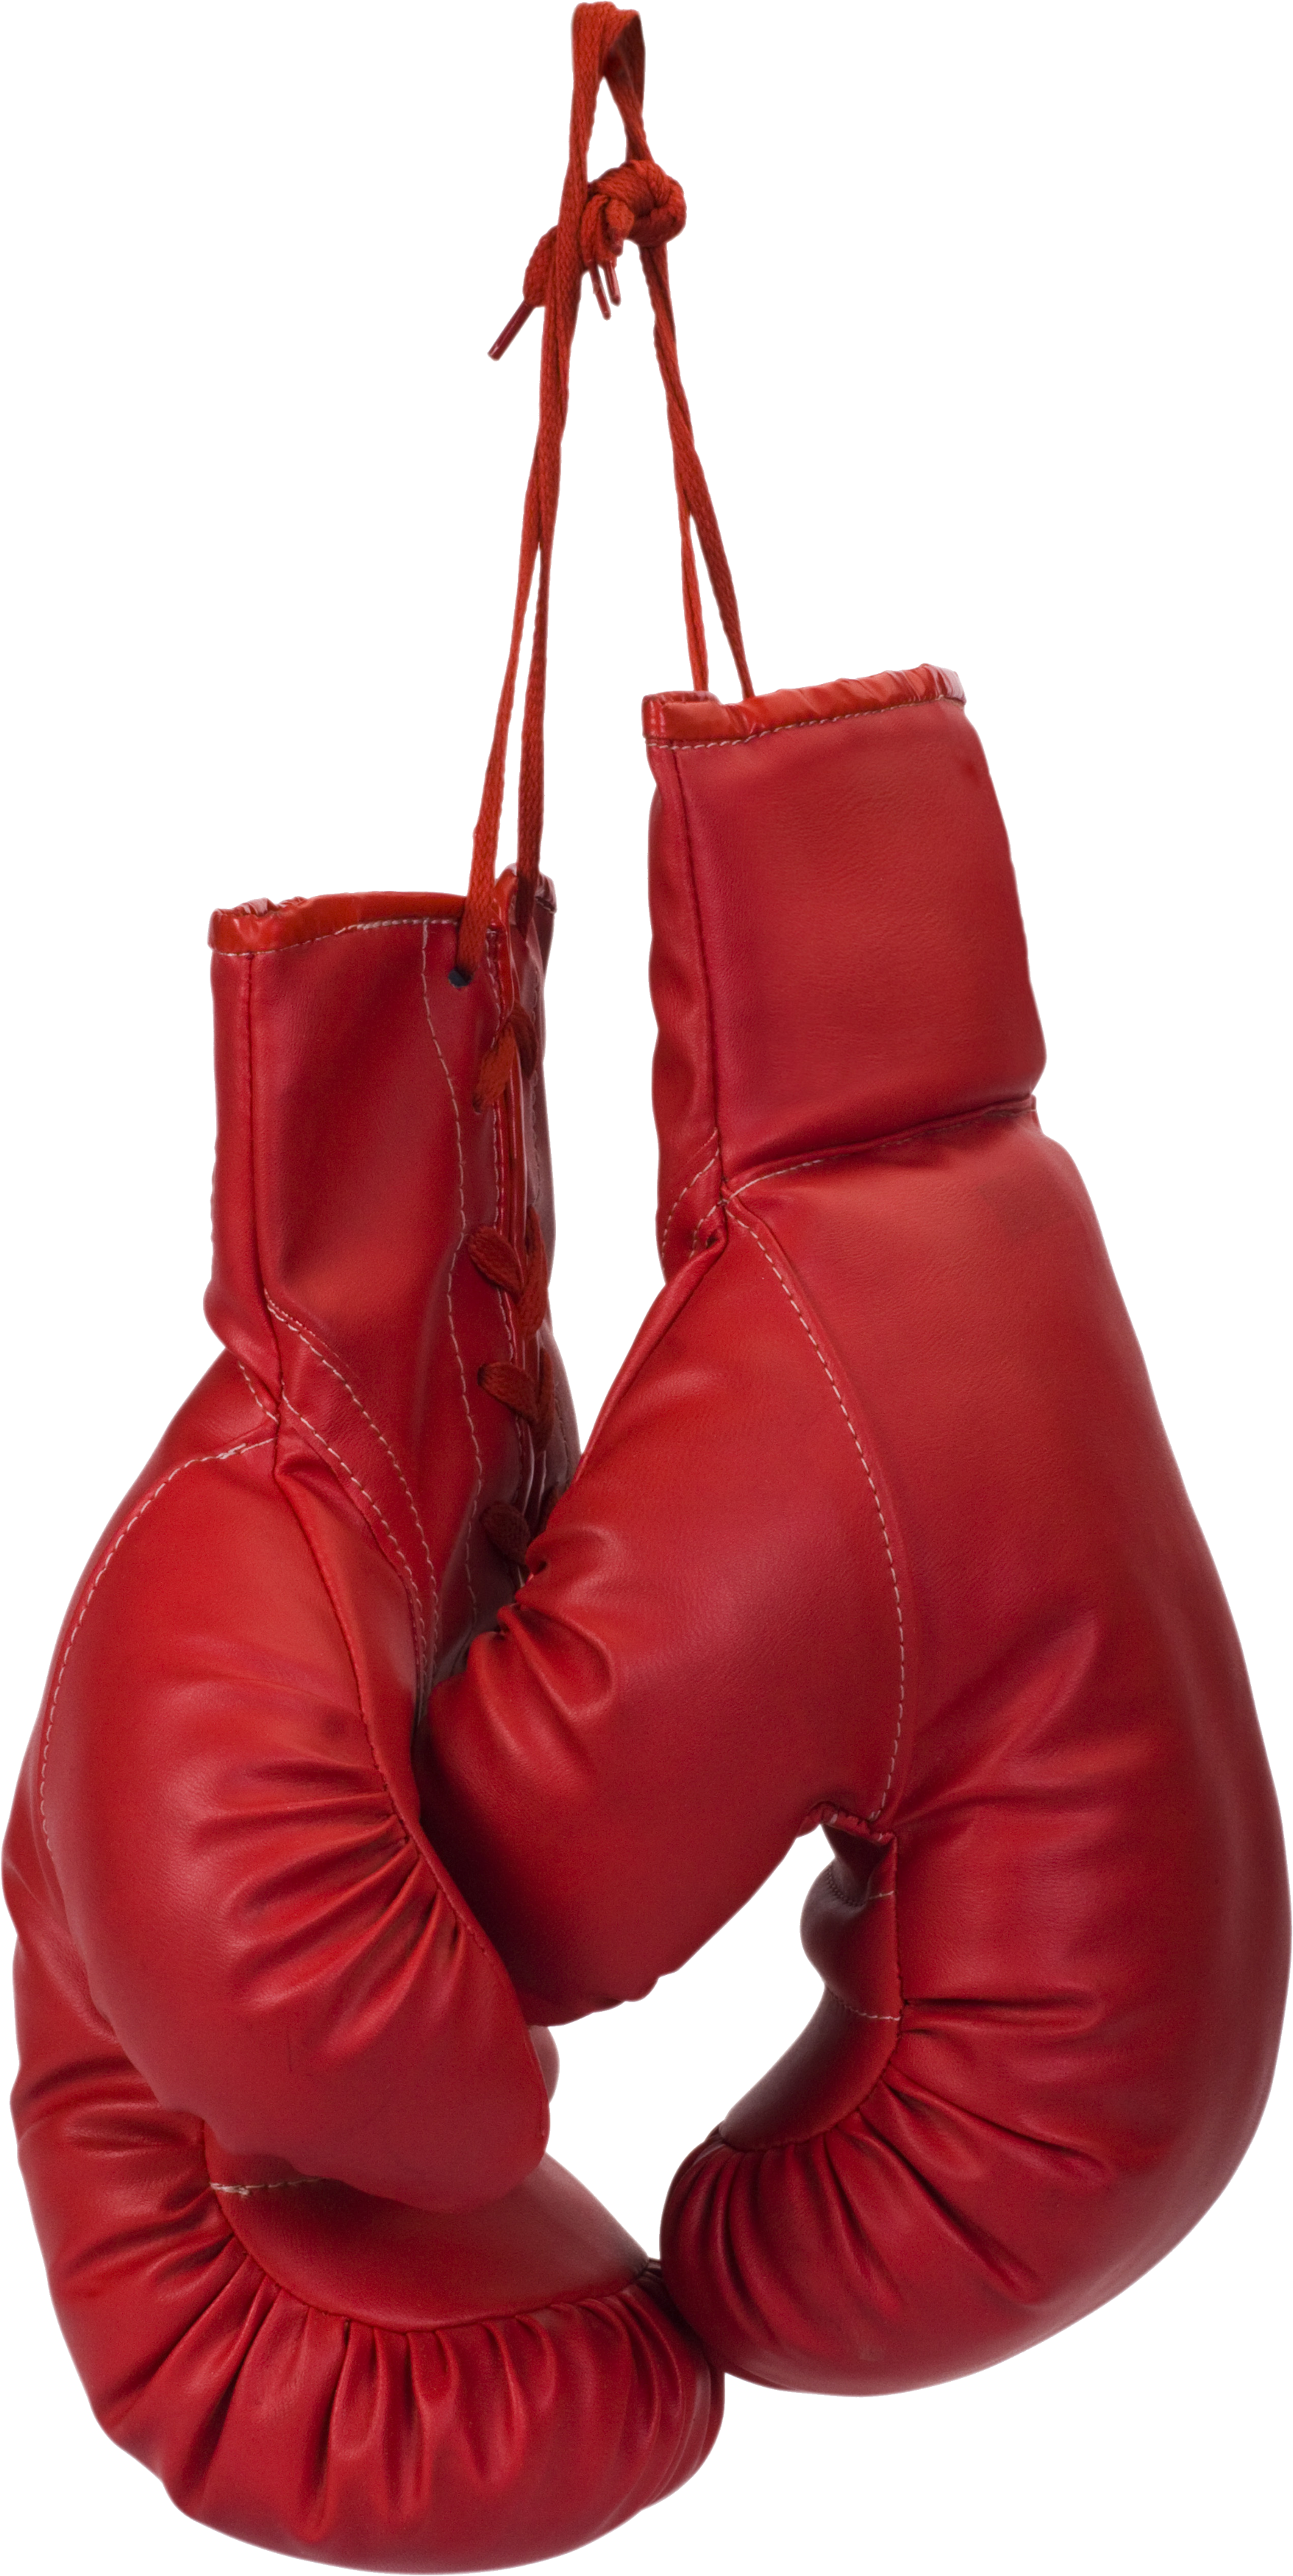 Hanging Boxing Gloves Png Image - Hanging Boxing Gloves Png Image (1758x3502)